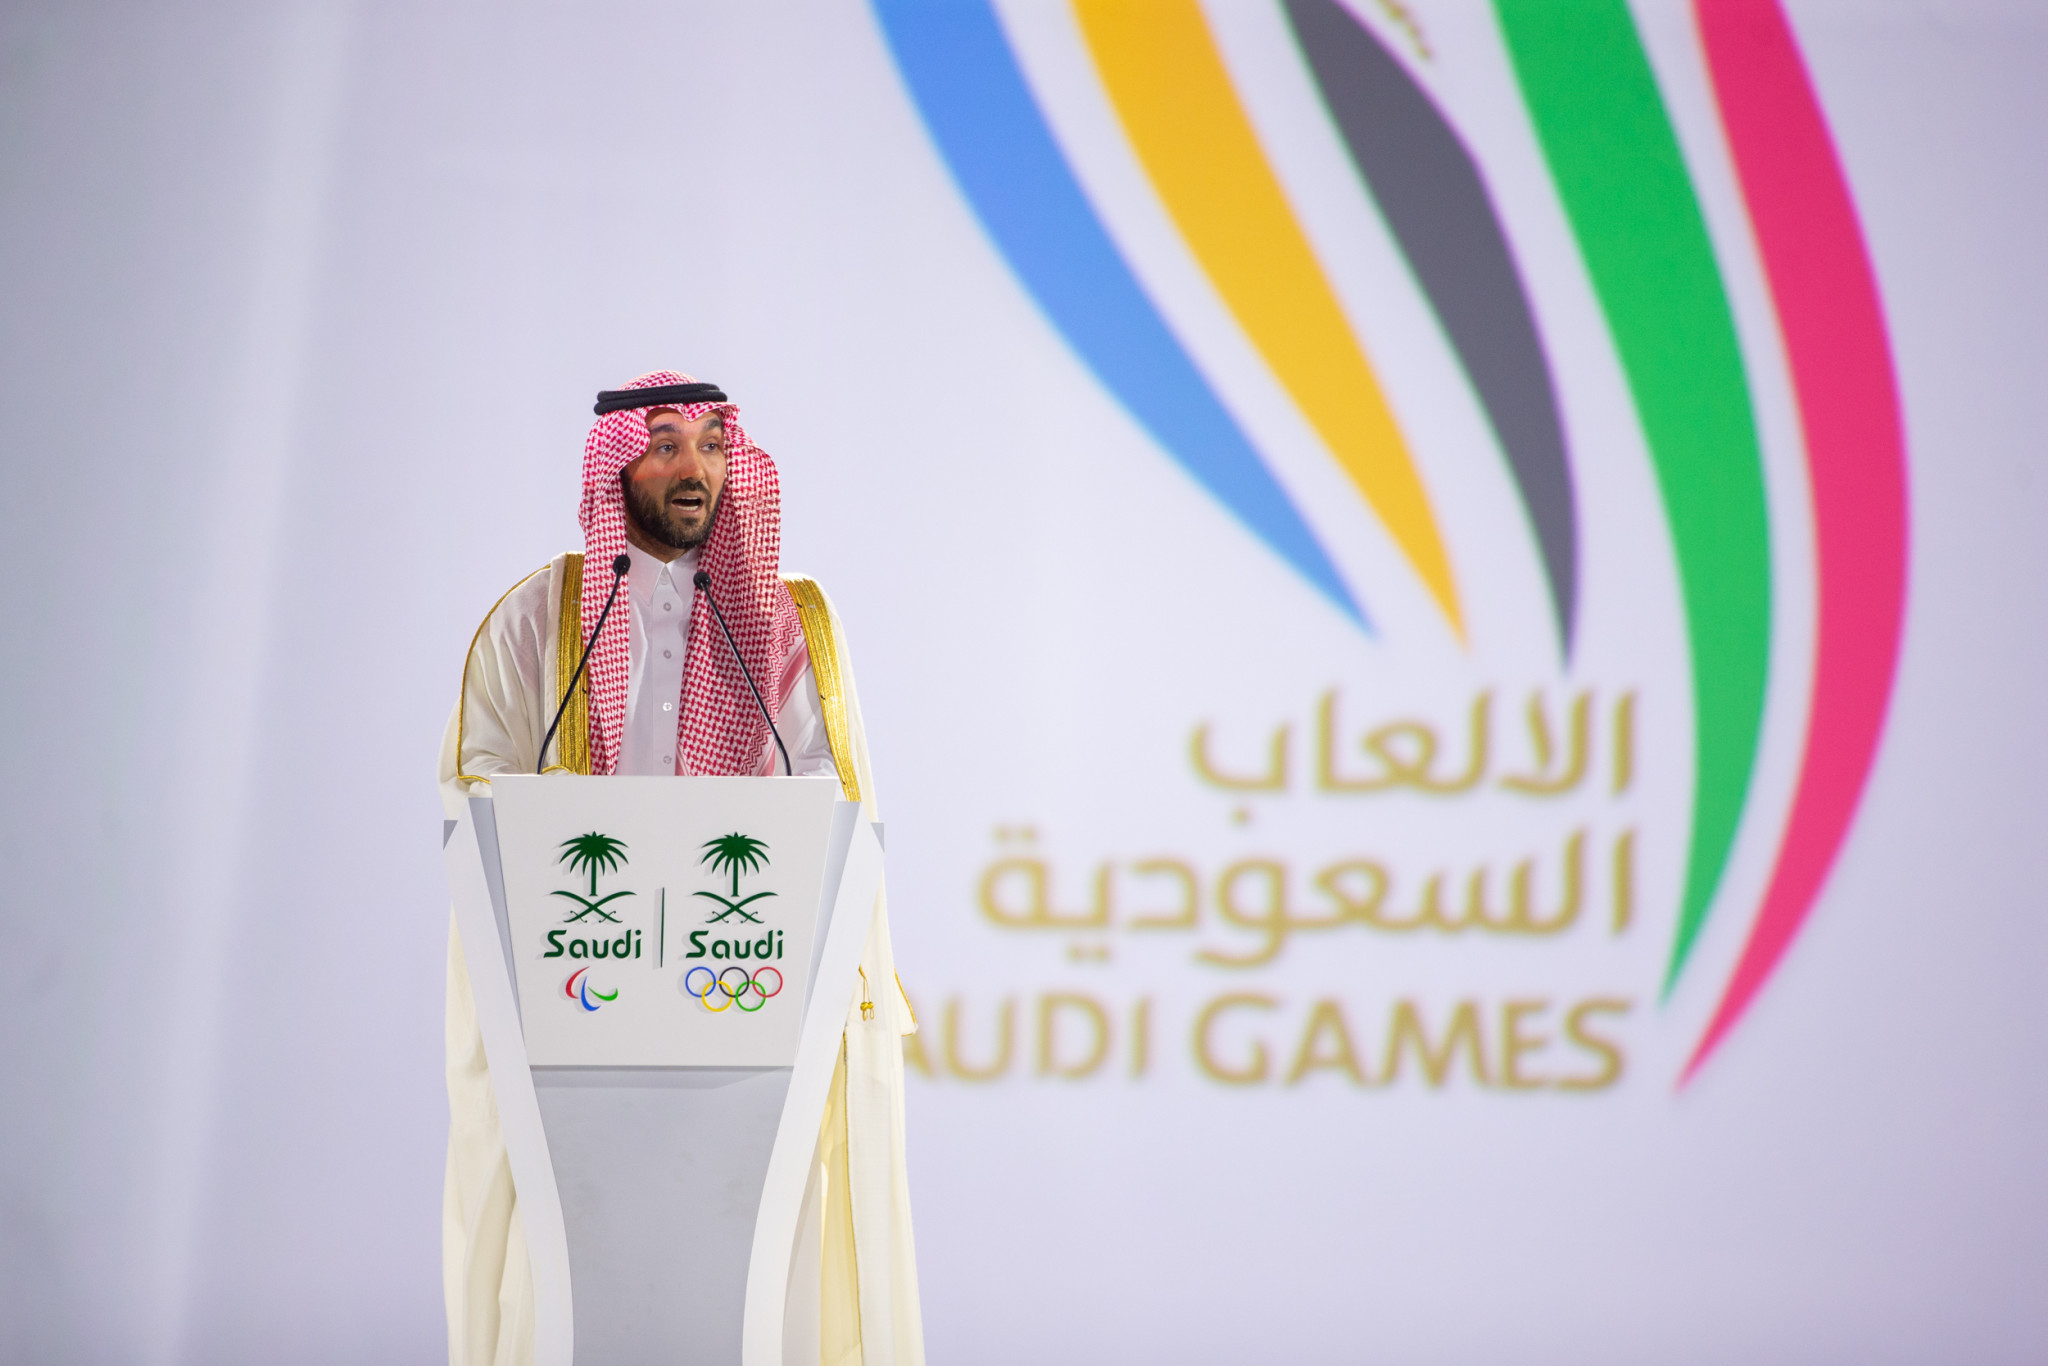 Saudi Sports Minister Prince Abdulaziz bin Turki Al-Faisal said the Saudi Games were part of a drive to make the country a sporting powerhouse ©Saudi Games